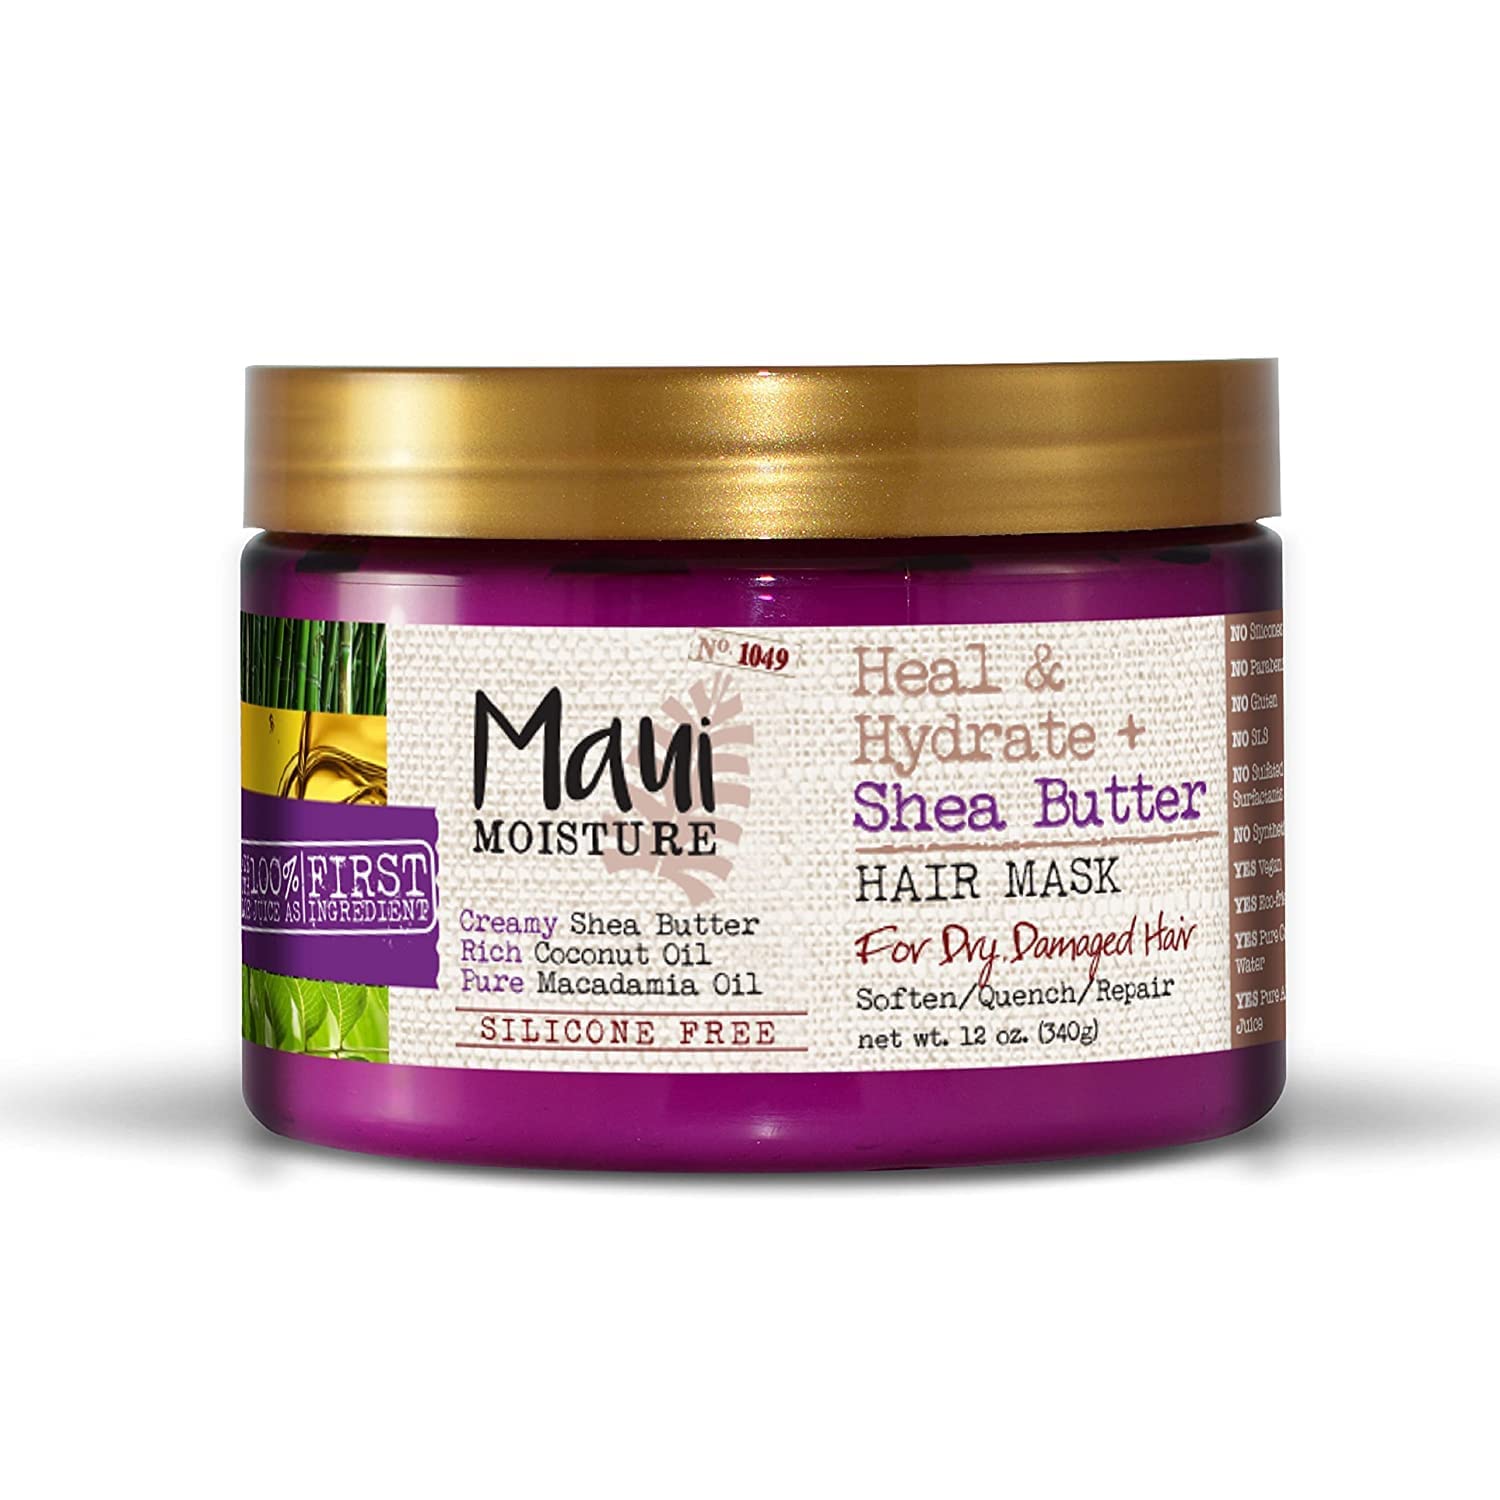 Maui Moisture Heal & Hydrate + Shea Butter Hair Mask & [...]